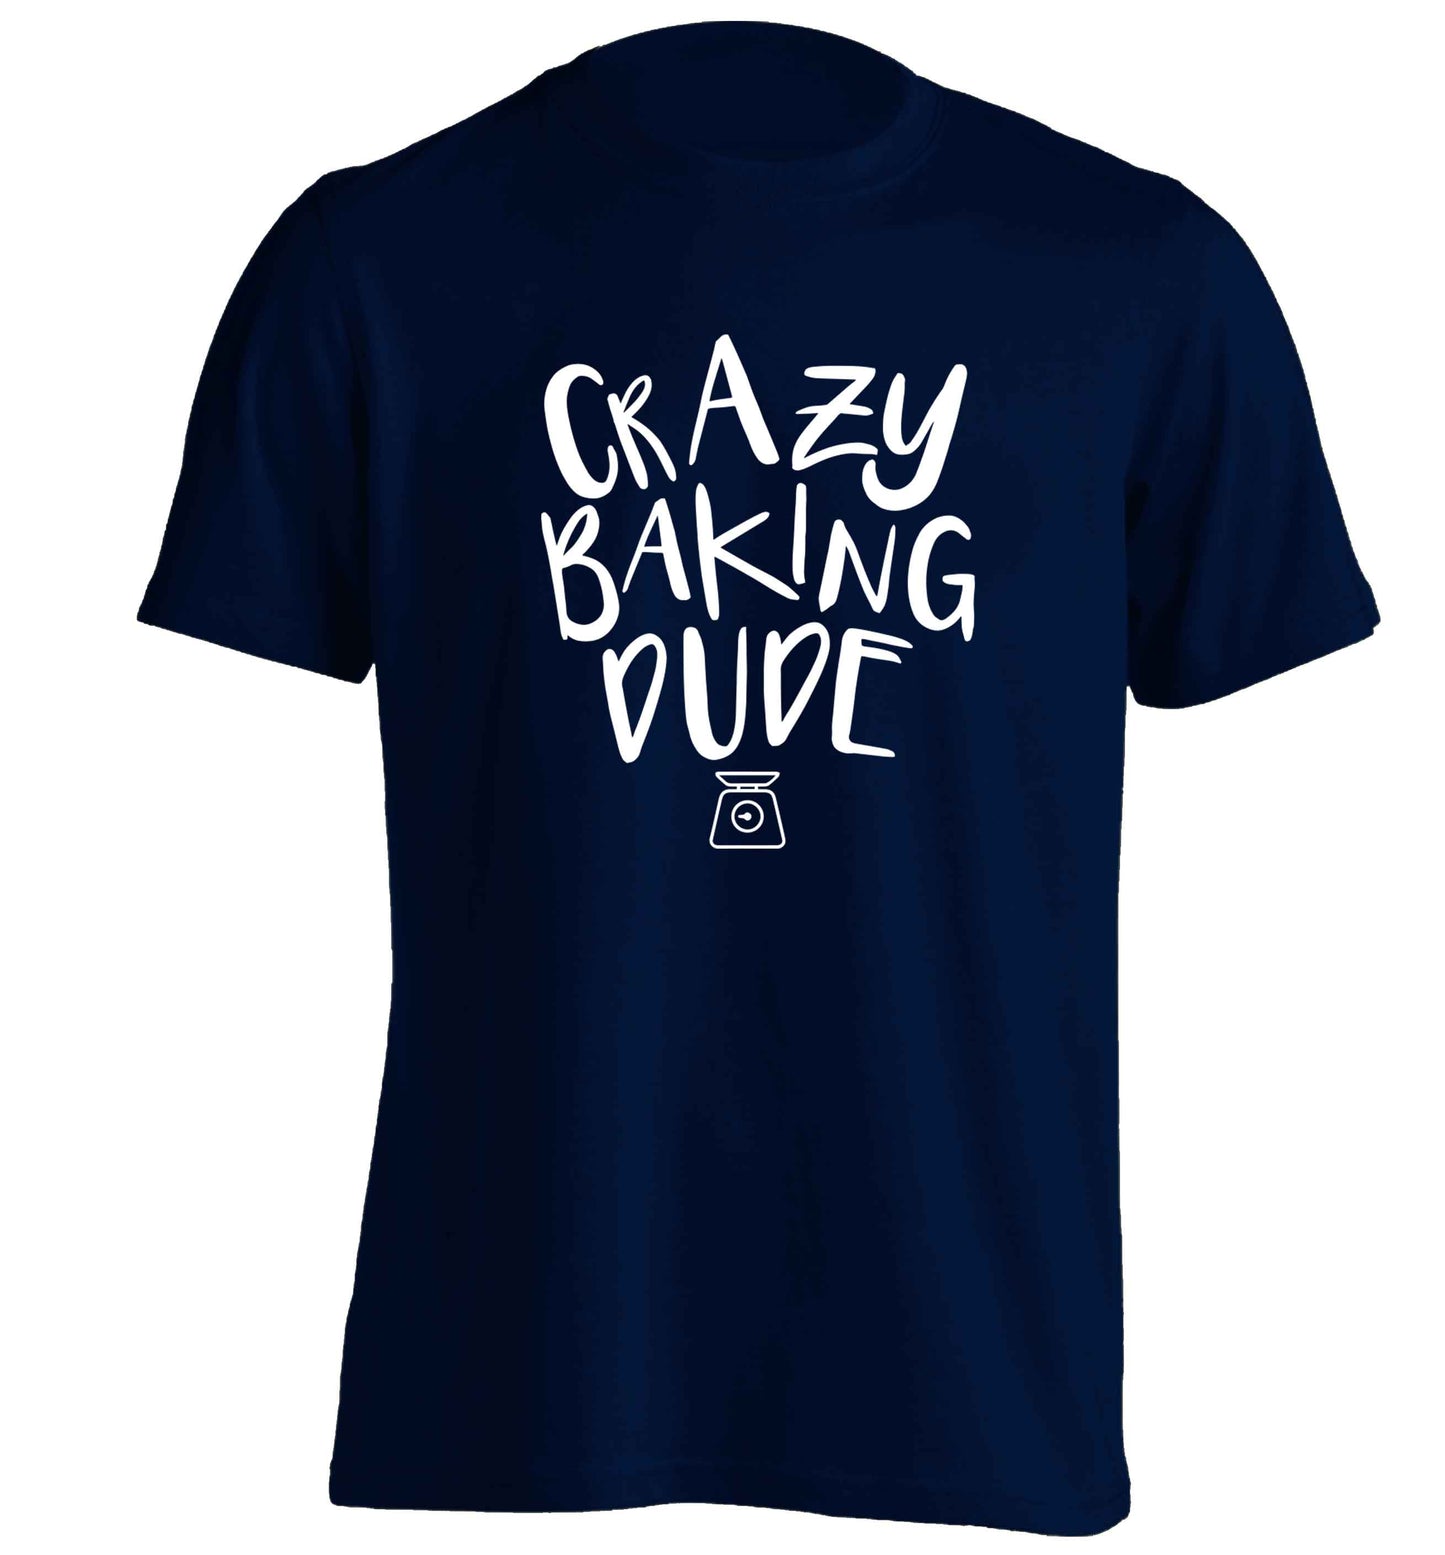 Crazy baking dude adults unisex navy Tshirt 2XL